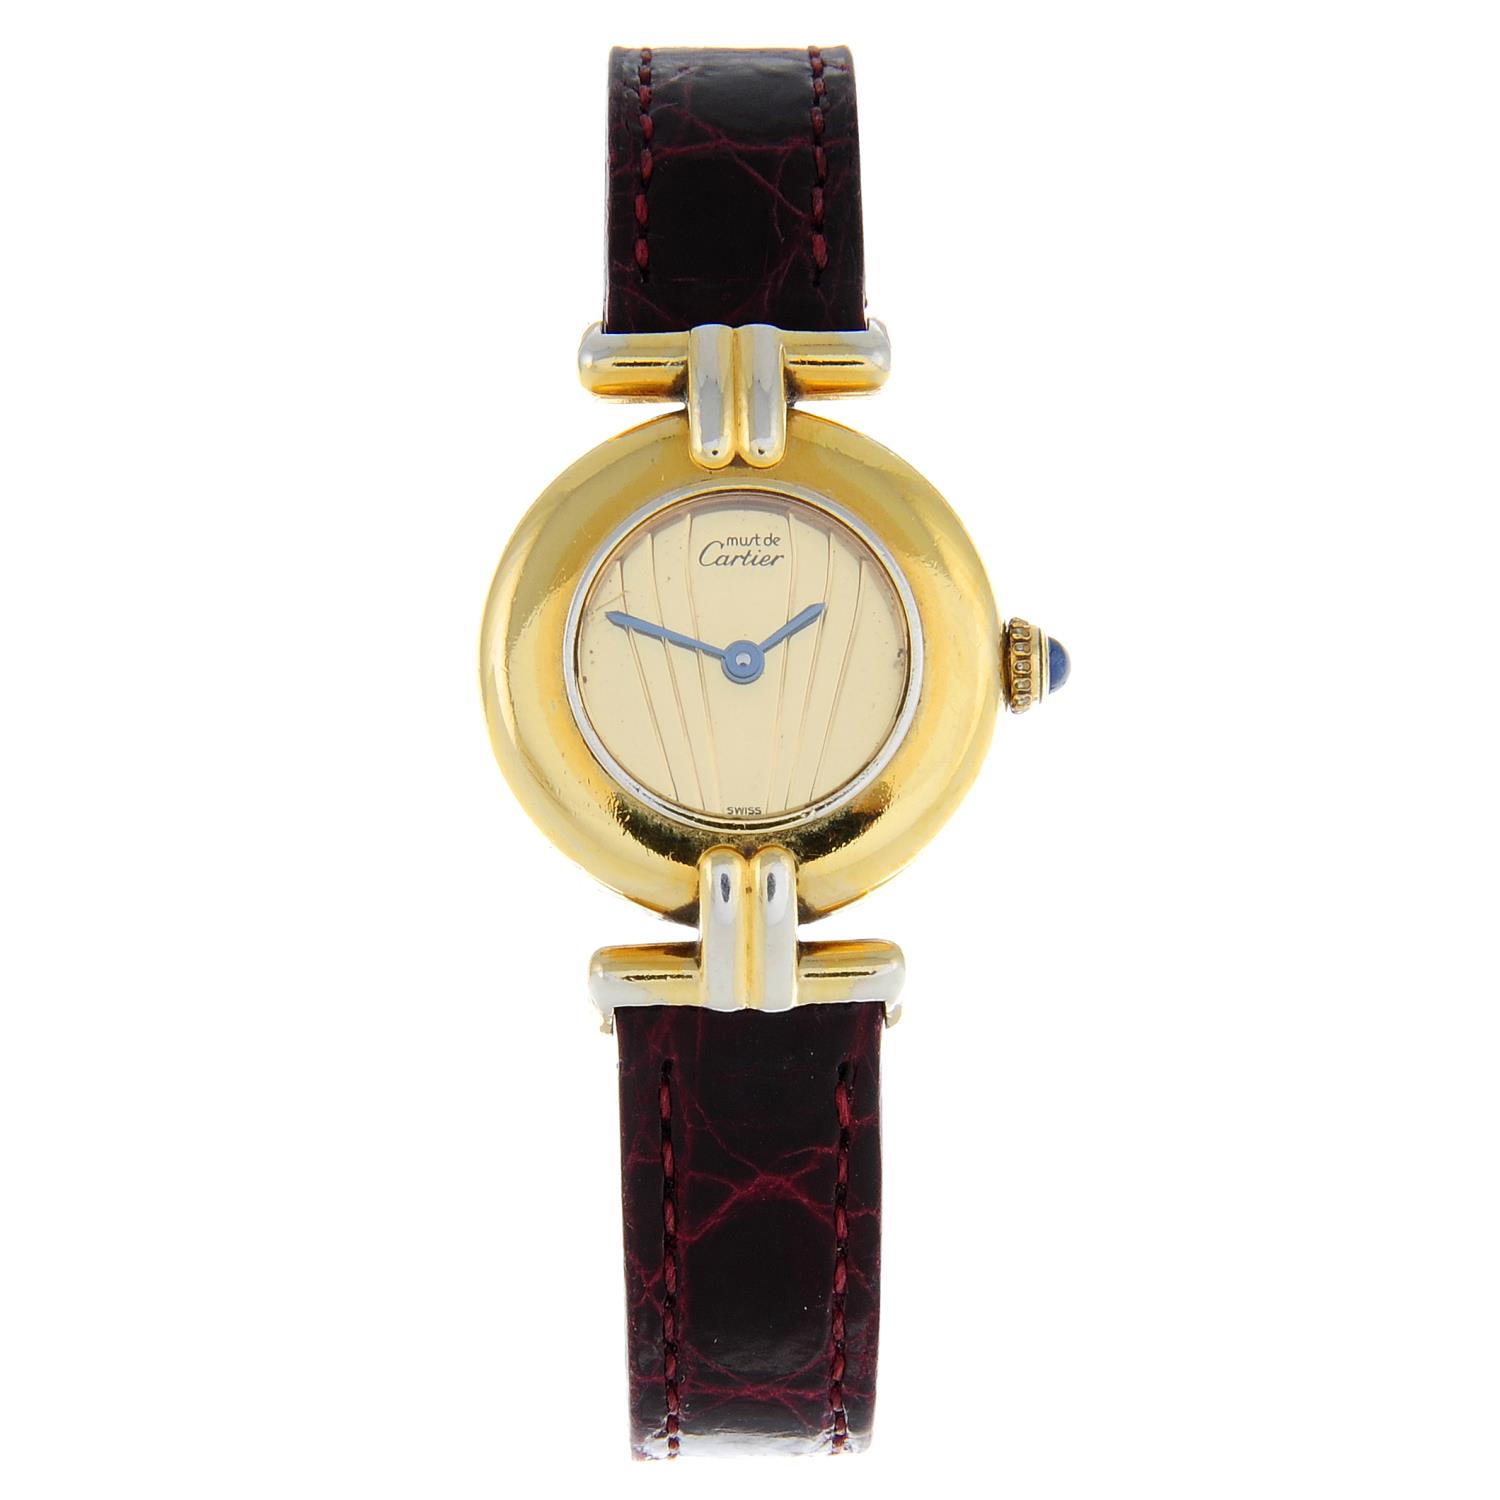 CARTIER - a lady's Must de Cartier Vendôme wrist watch.